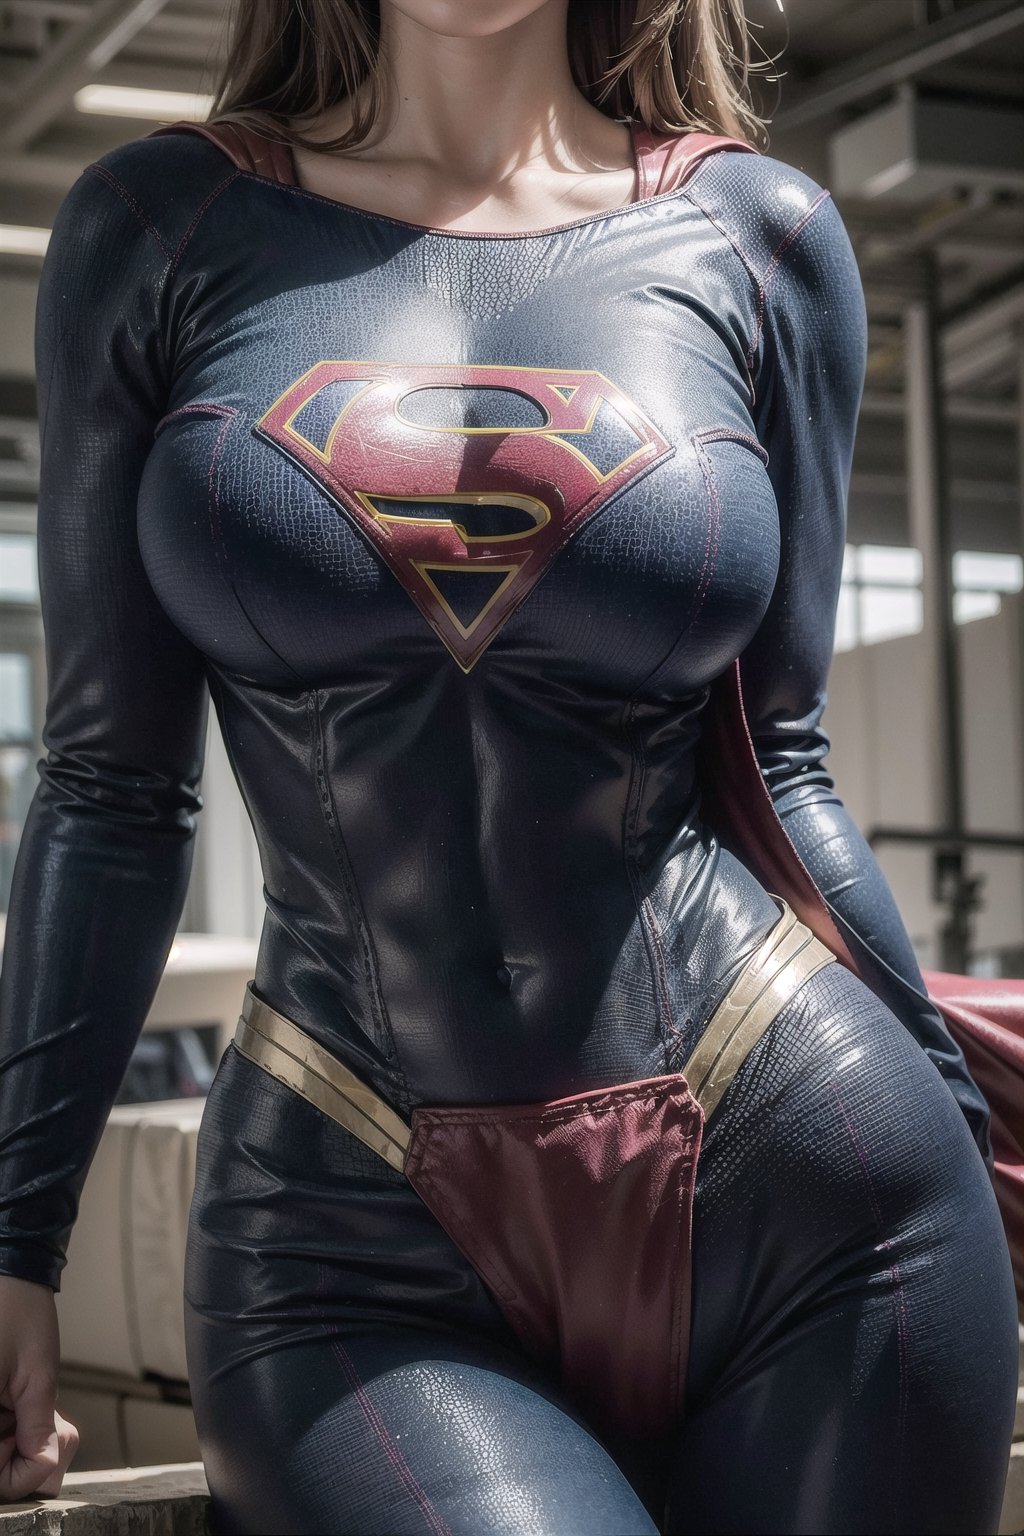 Beautiful woman in tight suit,(( large breast)),perfecteyes, Supergirl, superhero, Supergirl logo closeup, tight suit